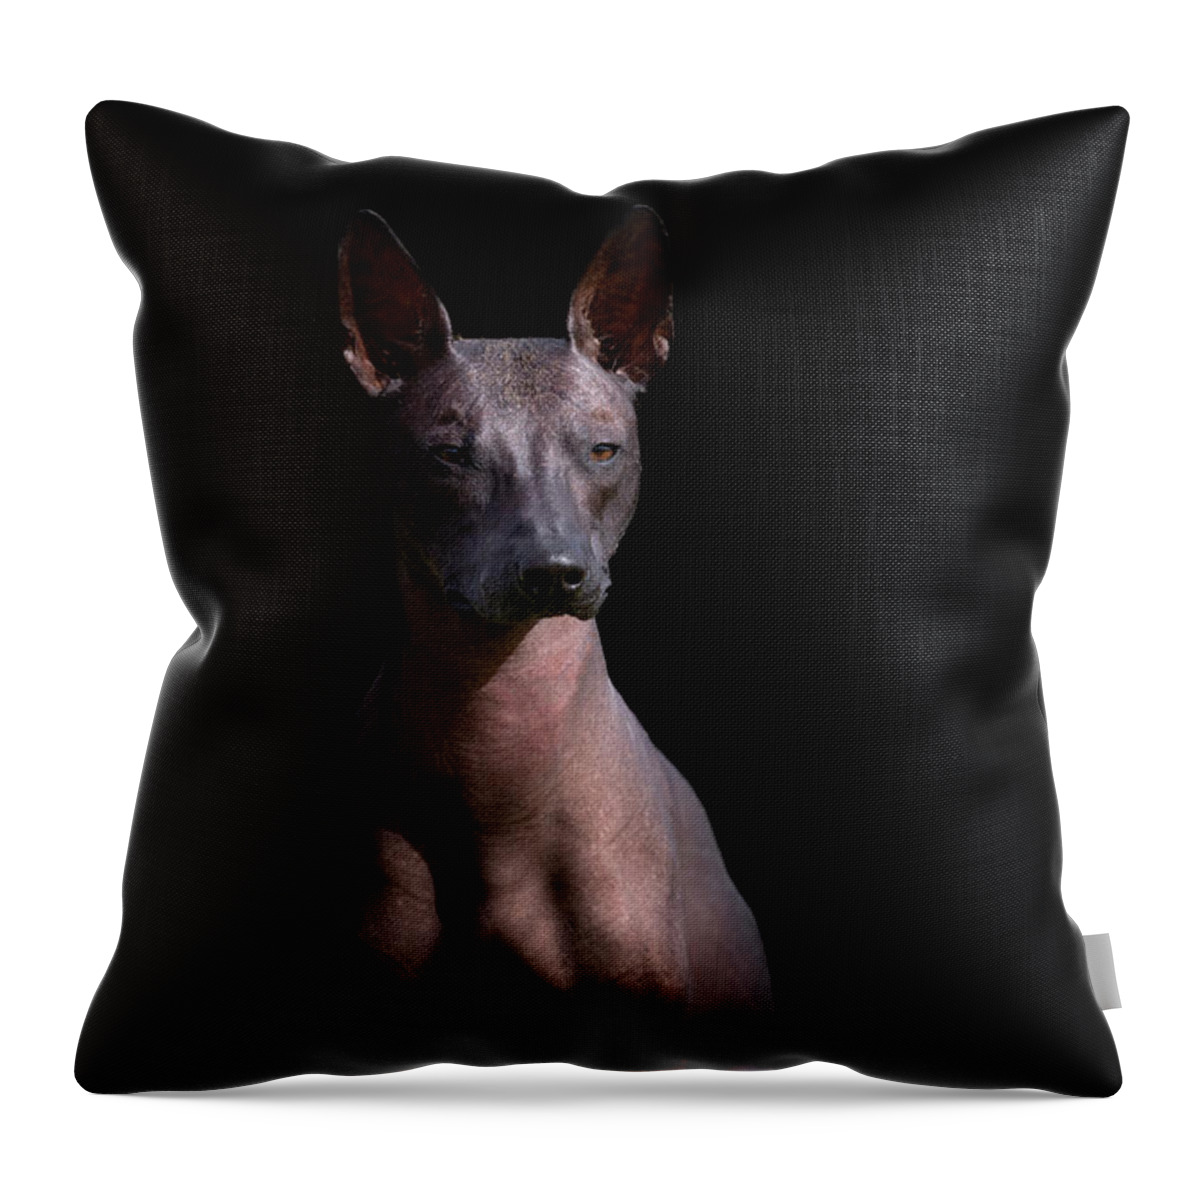 Xoloitzcuintli Throw Pillow featuring the photograph Xoloitzcuintle Portrait on Black by Diana Andersen